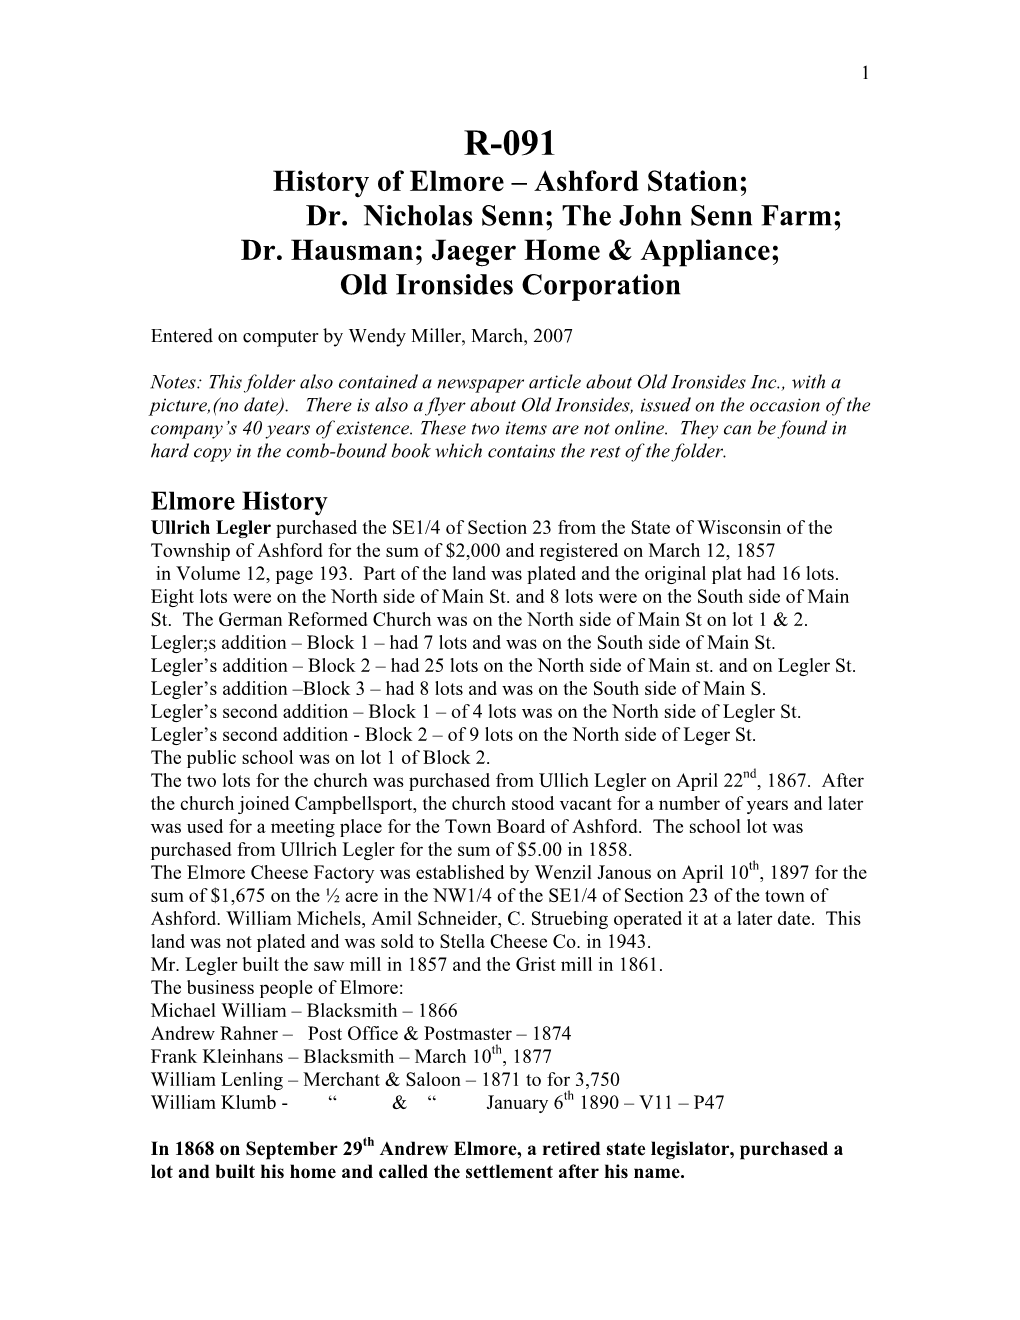 History of Elmore – Ashford Station; Dr. Nicholas Senn; the John Senn Farm; Dr